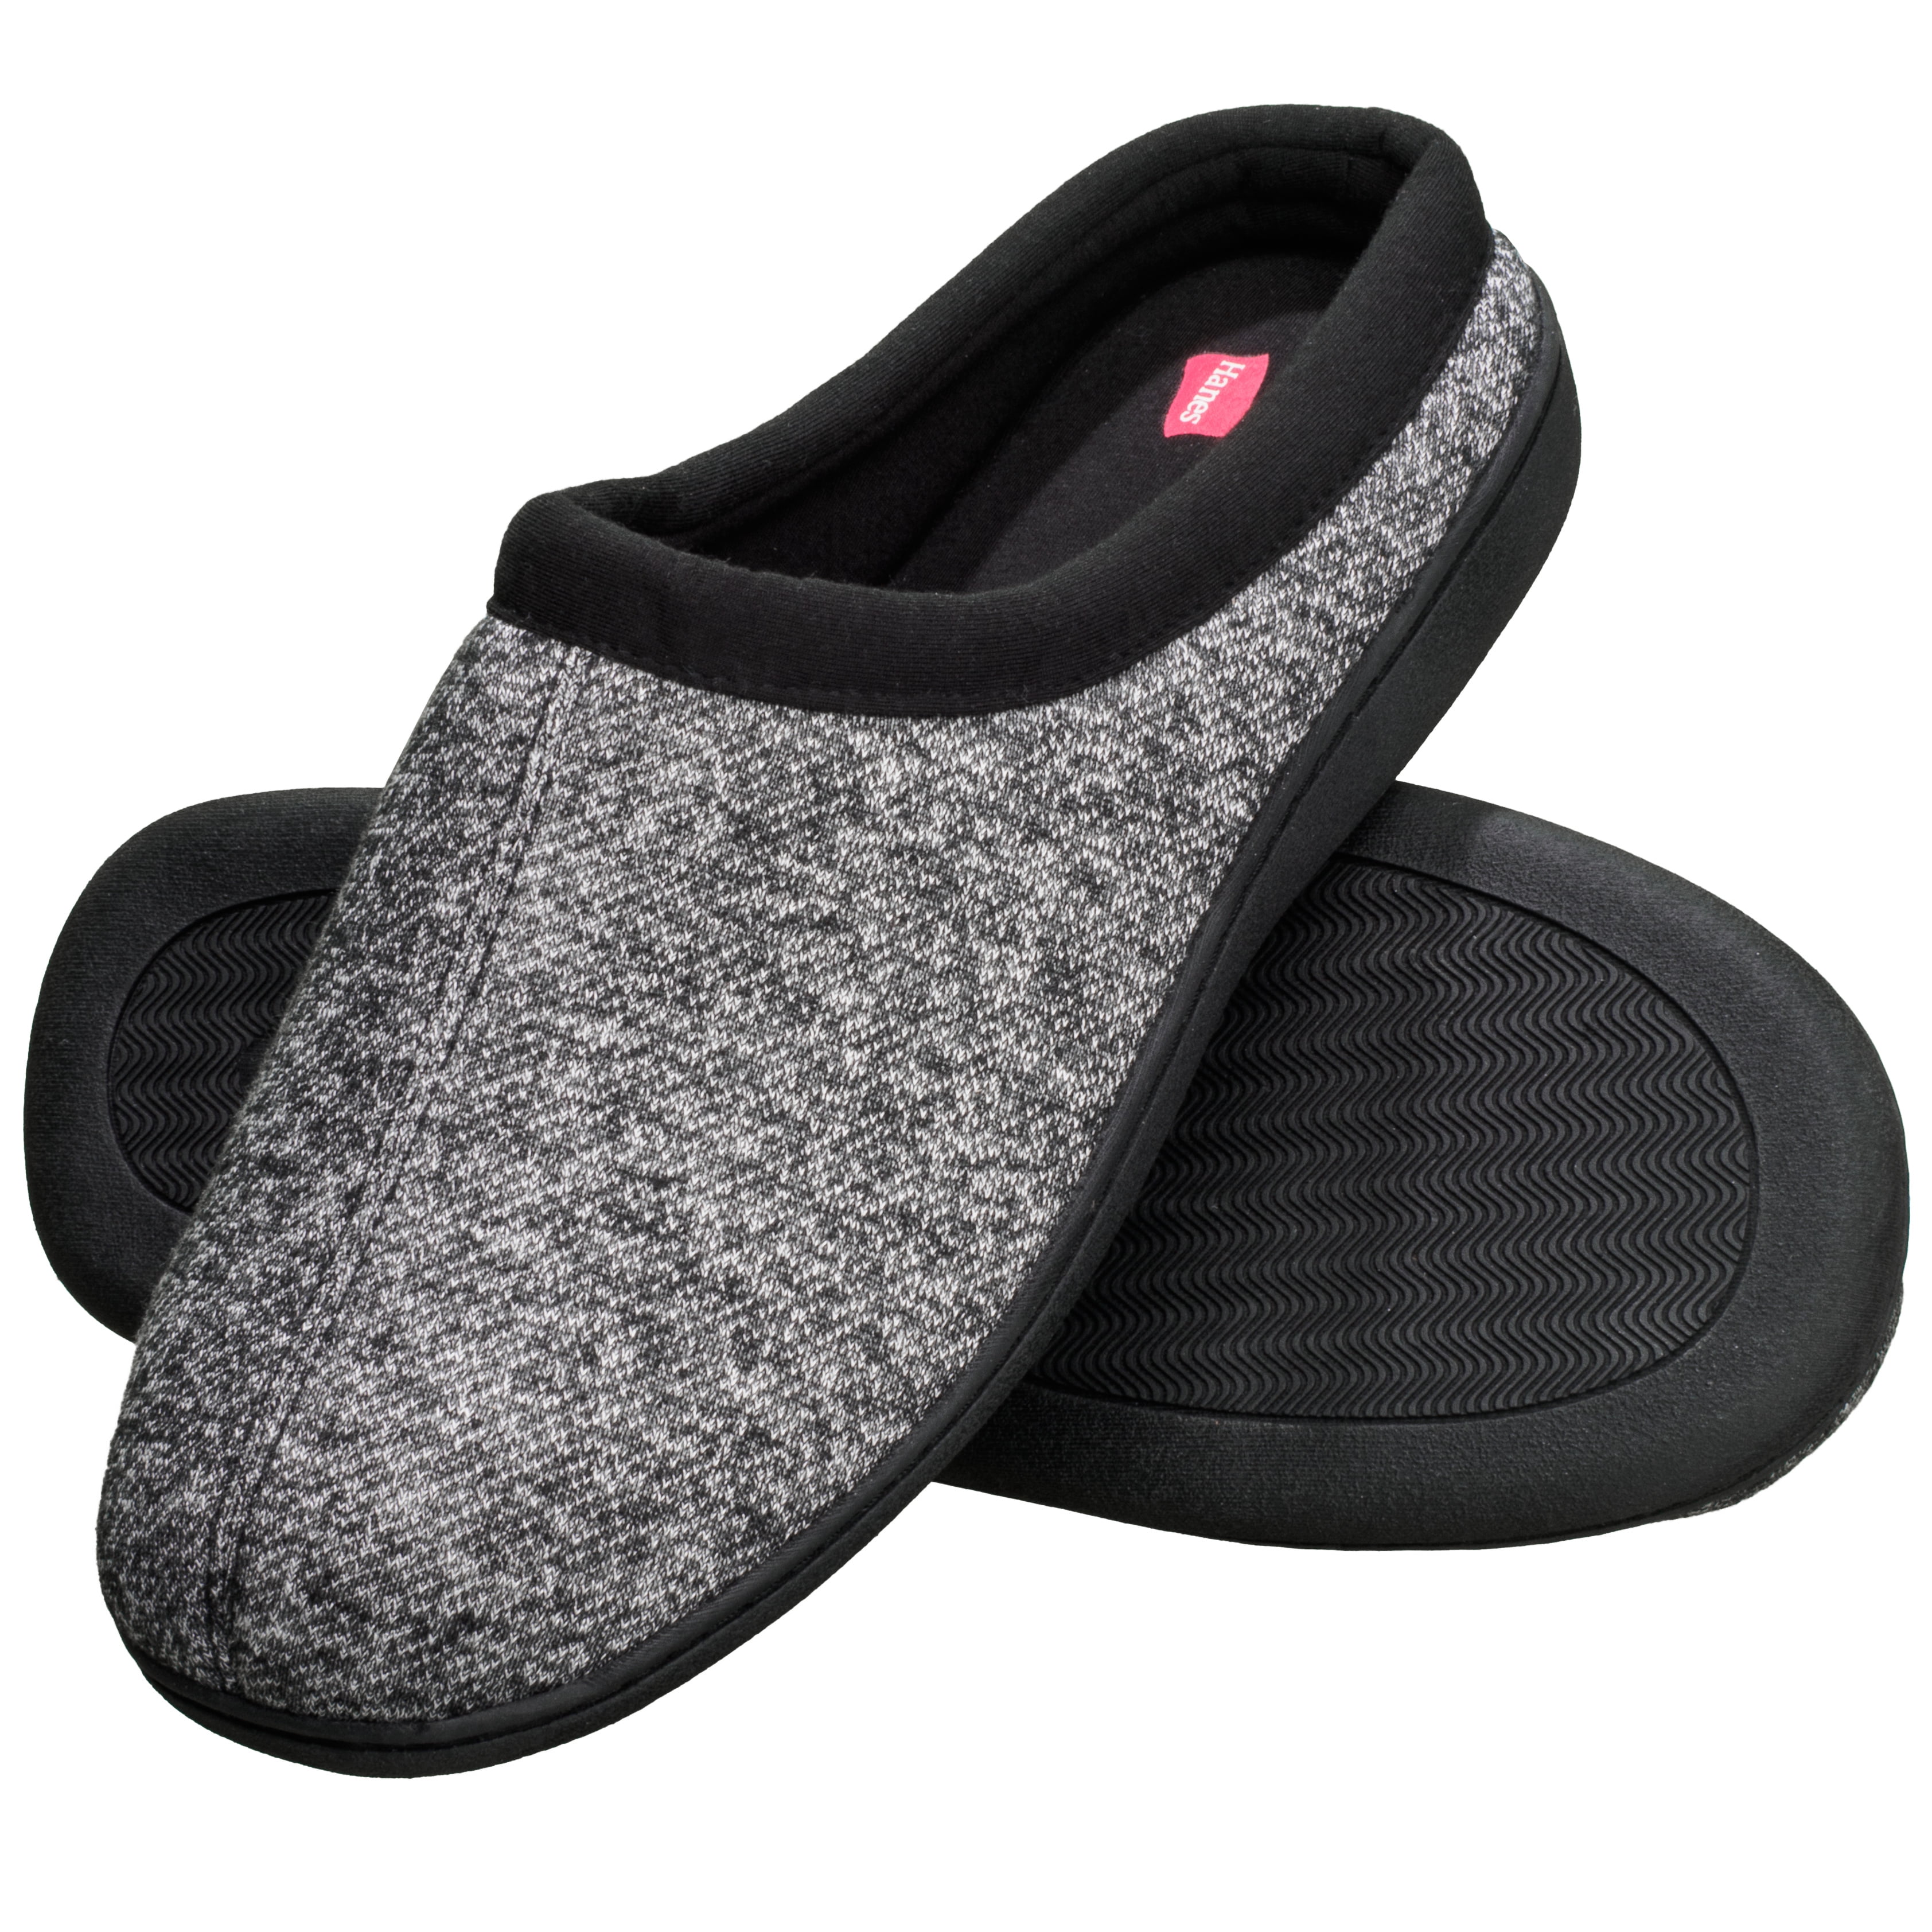 Mens Memory Foam Mule Slip on Slippers Shoes by DR KELLER Size 6,7,8,9,10,11,12 